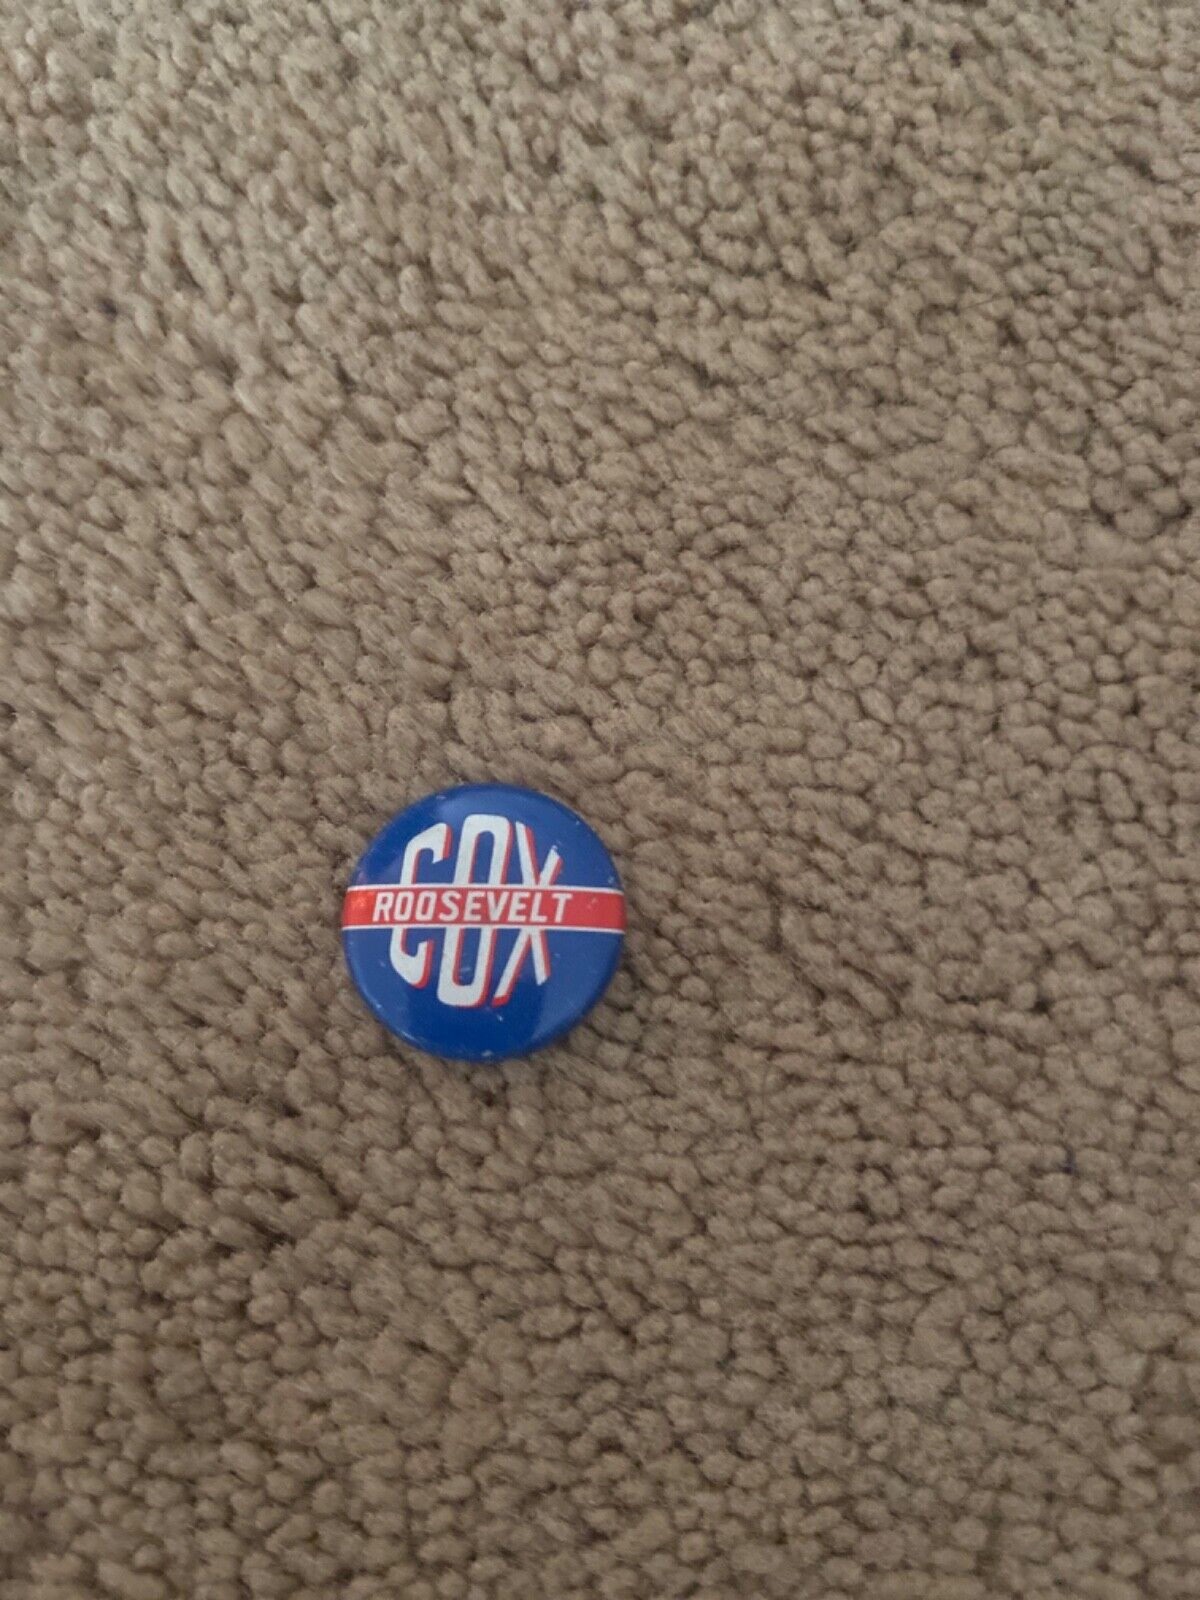 Cox/Roosevelt 1920 campaign pin button political